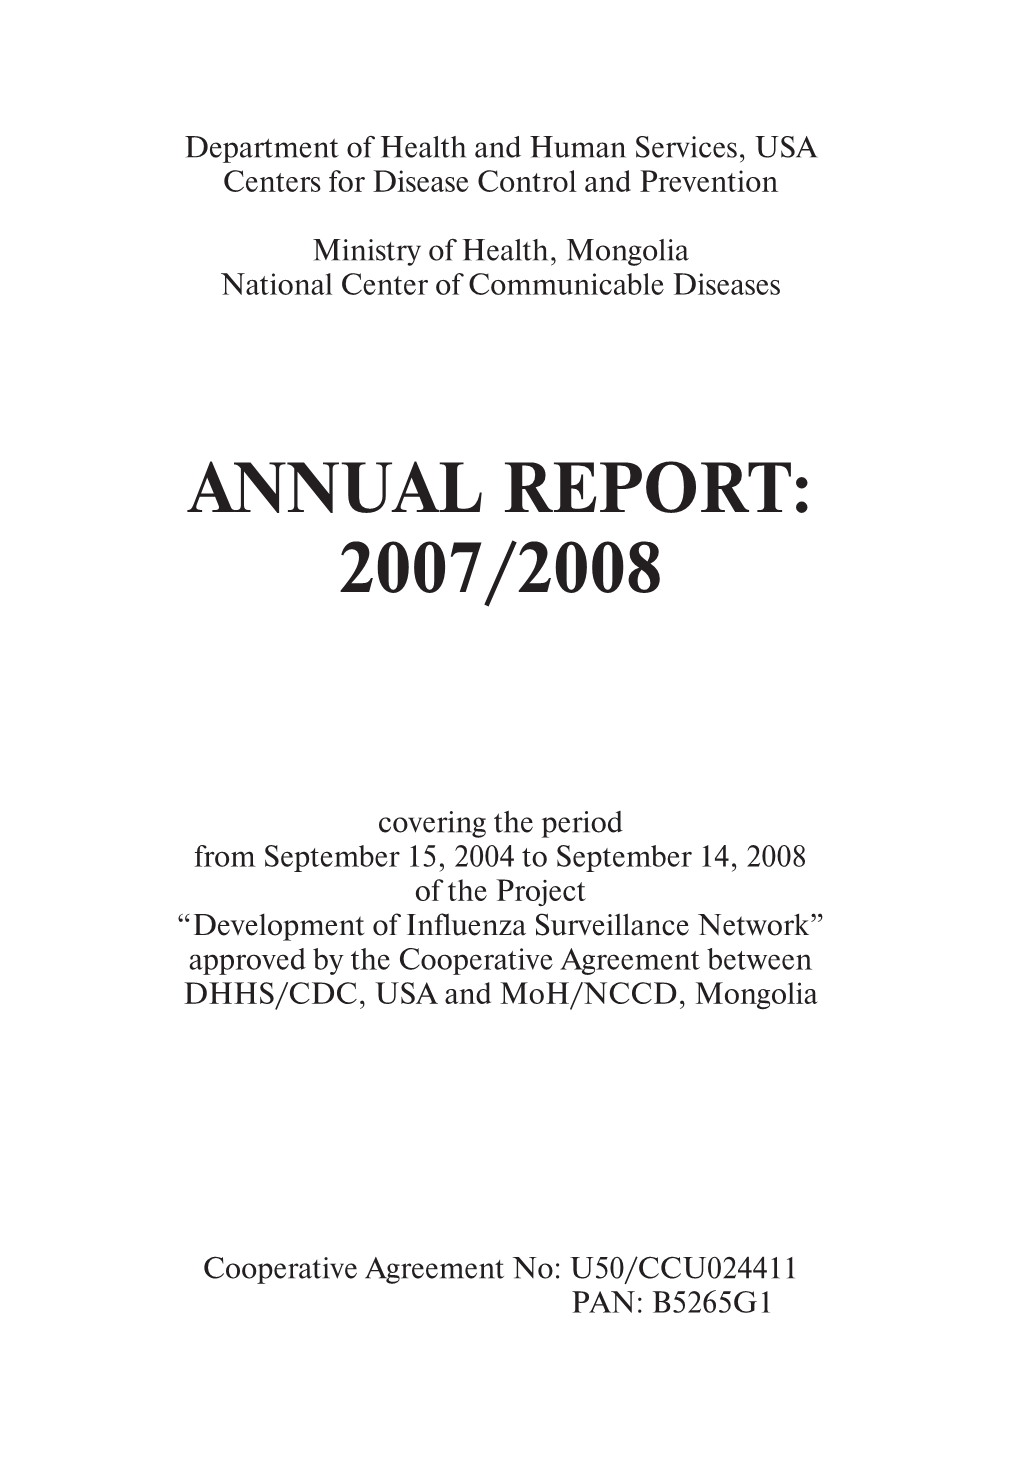 Annual Report: 2007/2008